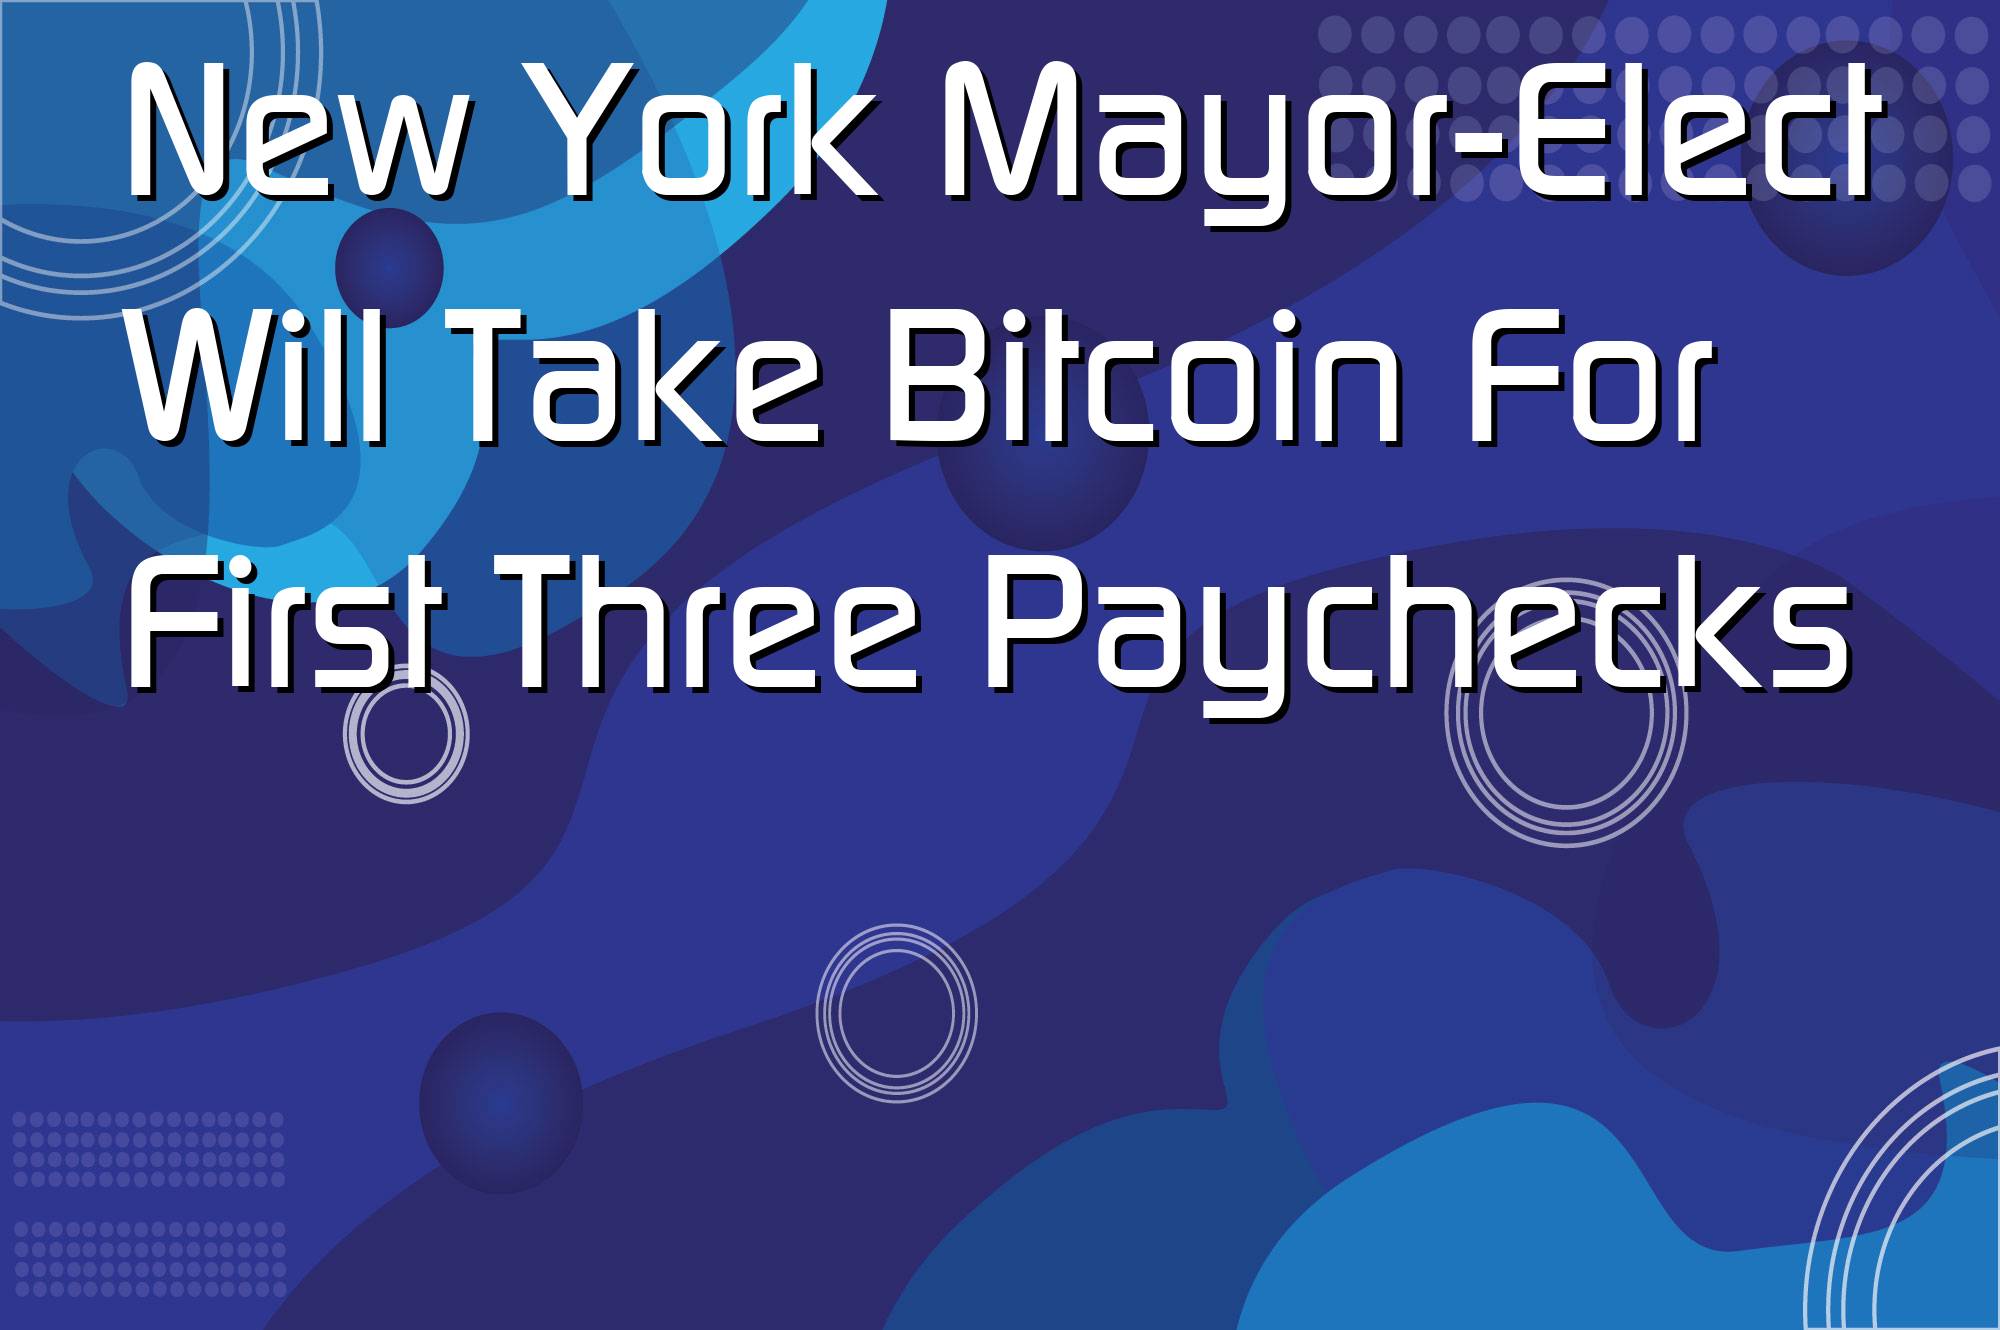 @$61116: New York Mayor-Elect Will Take Bitcoin For First Three Paychecks